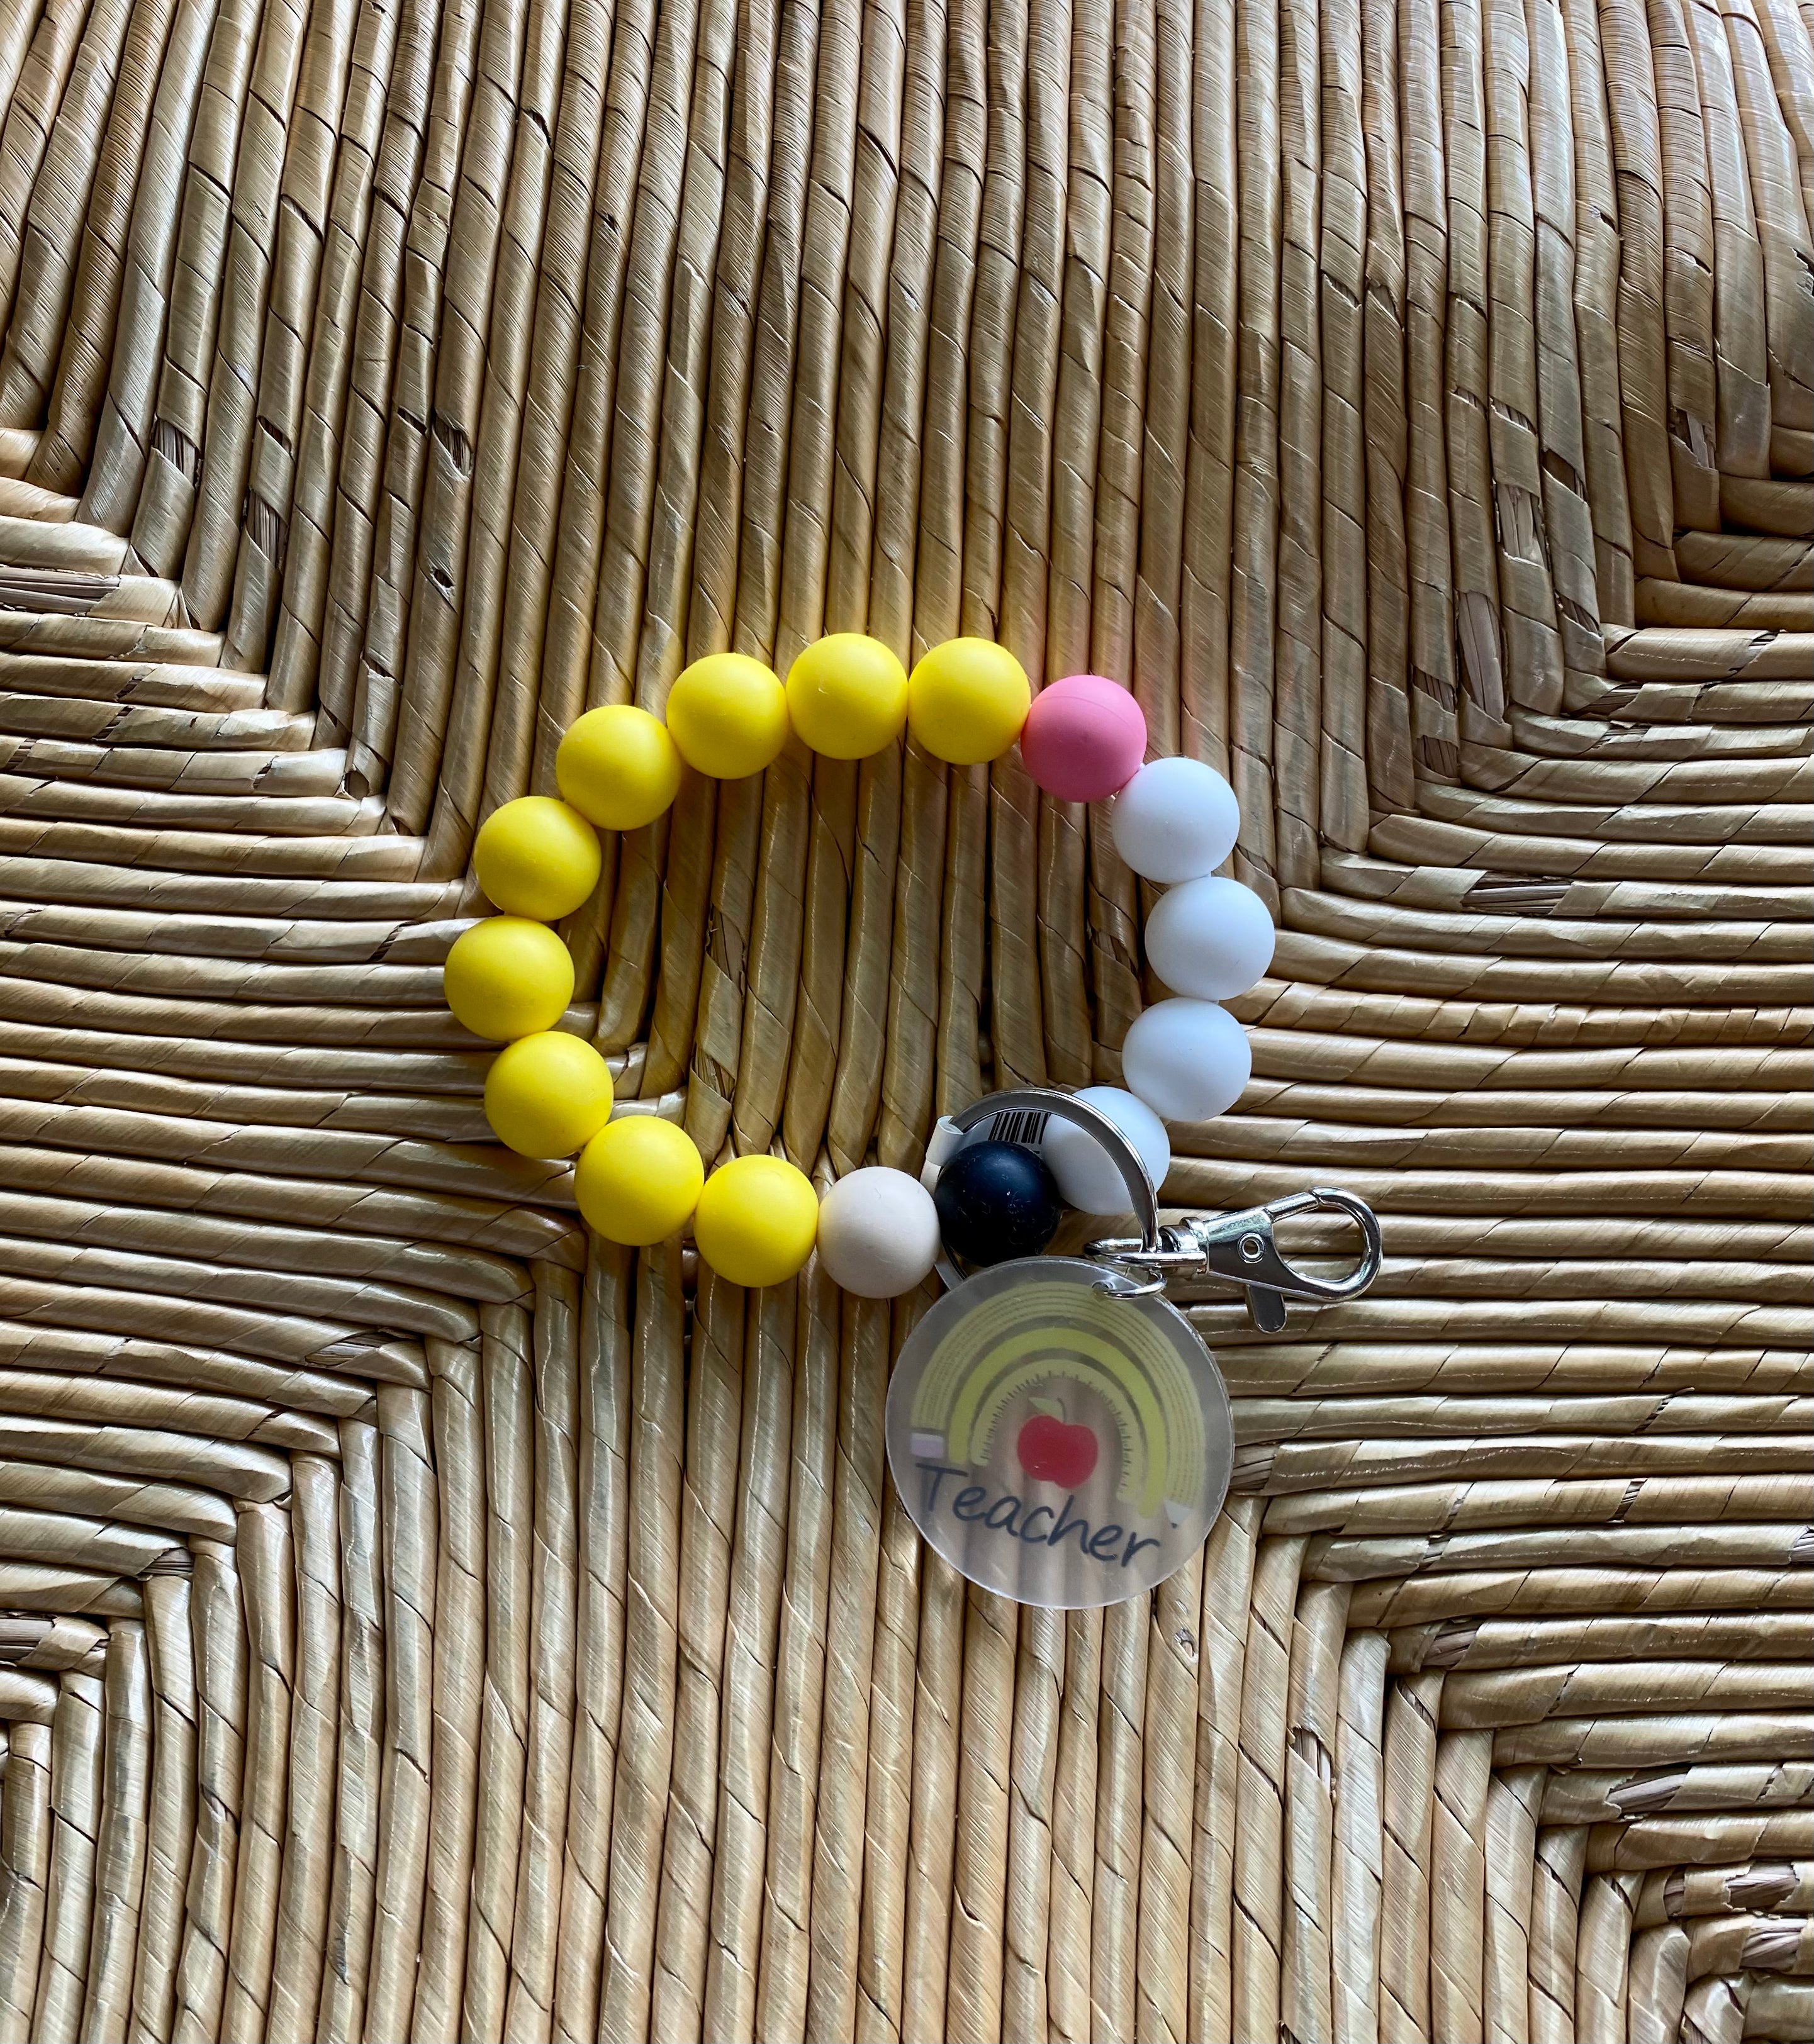 teacher yellow rubber keychain bracelet